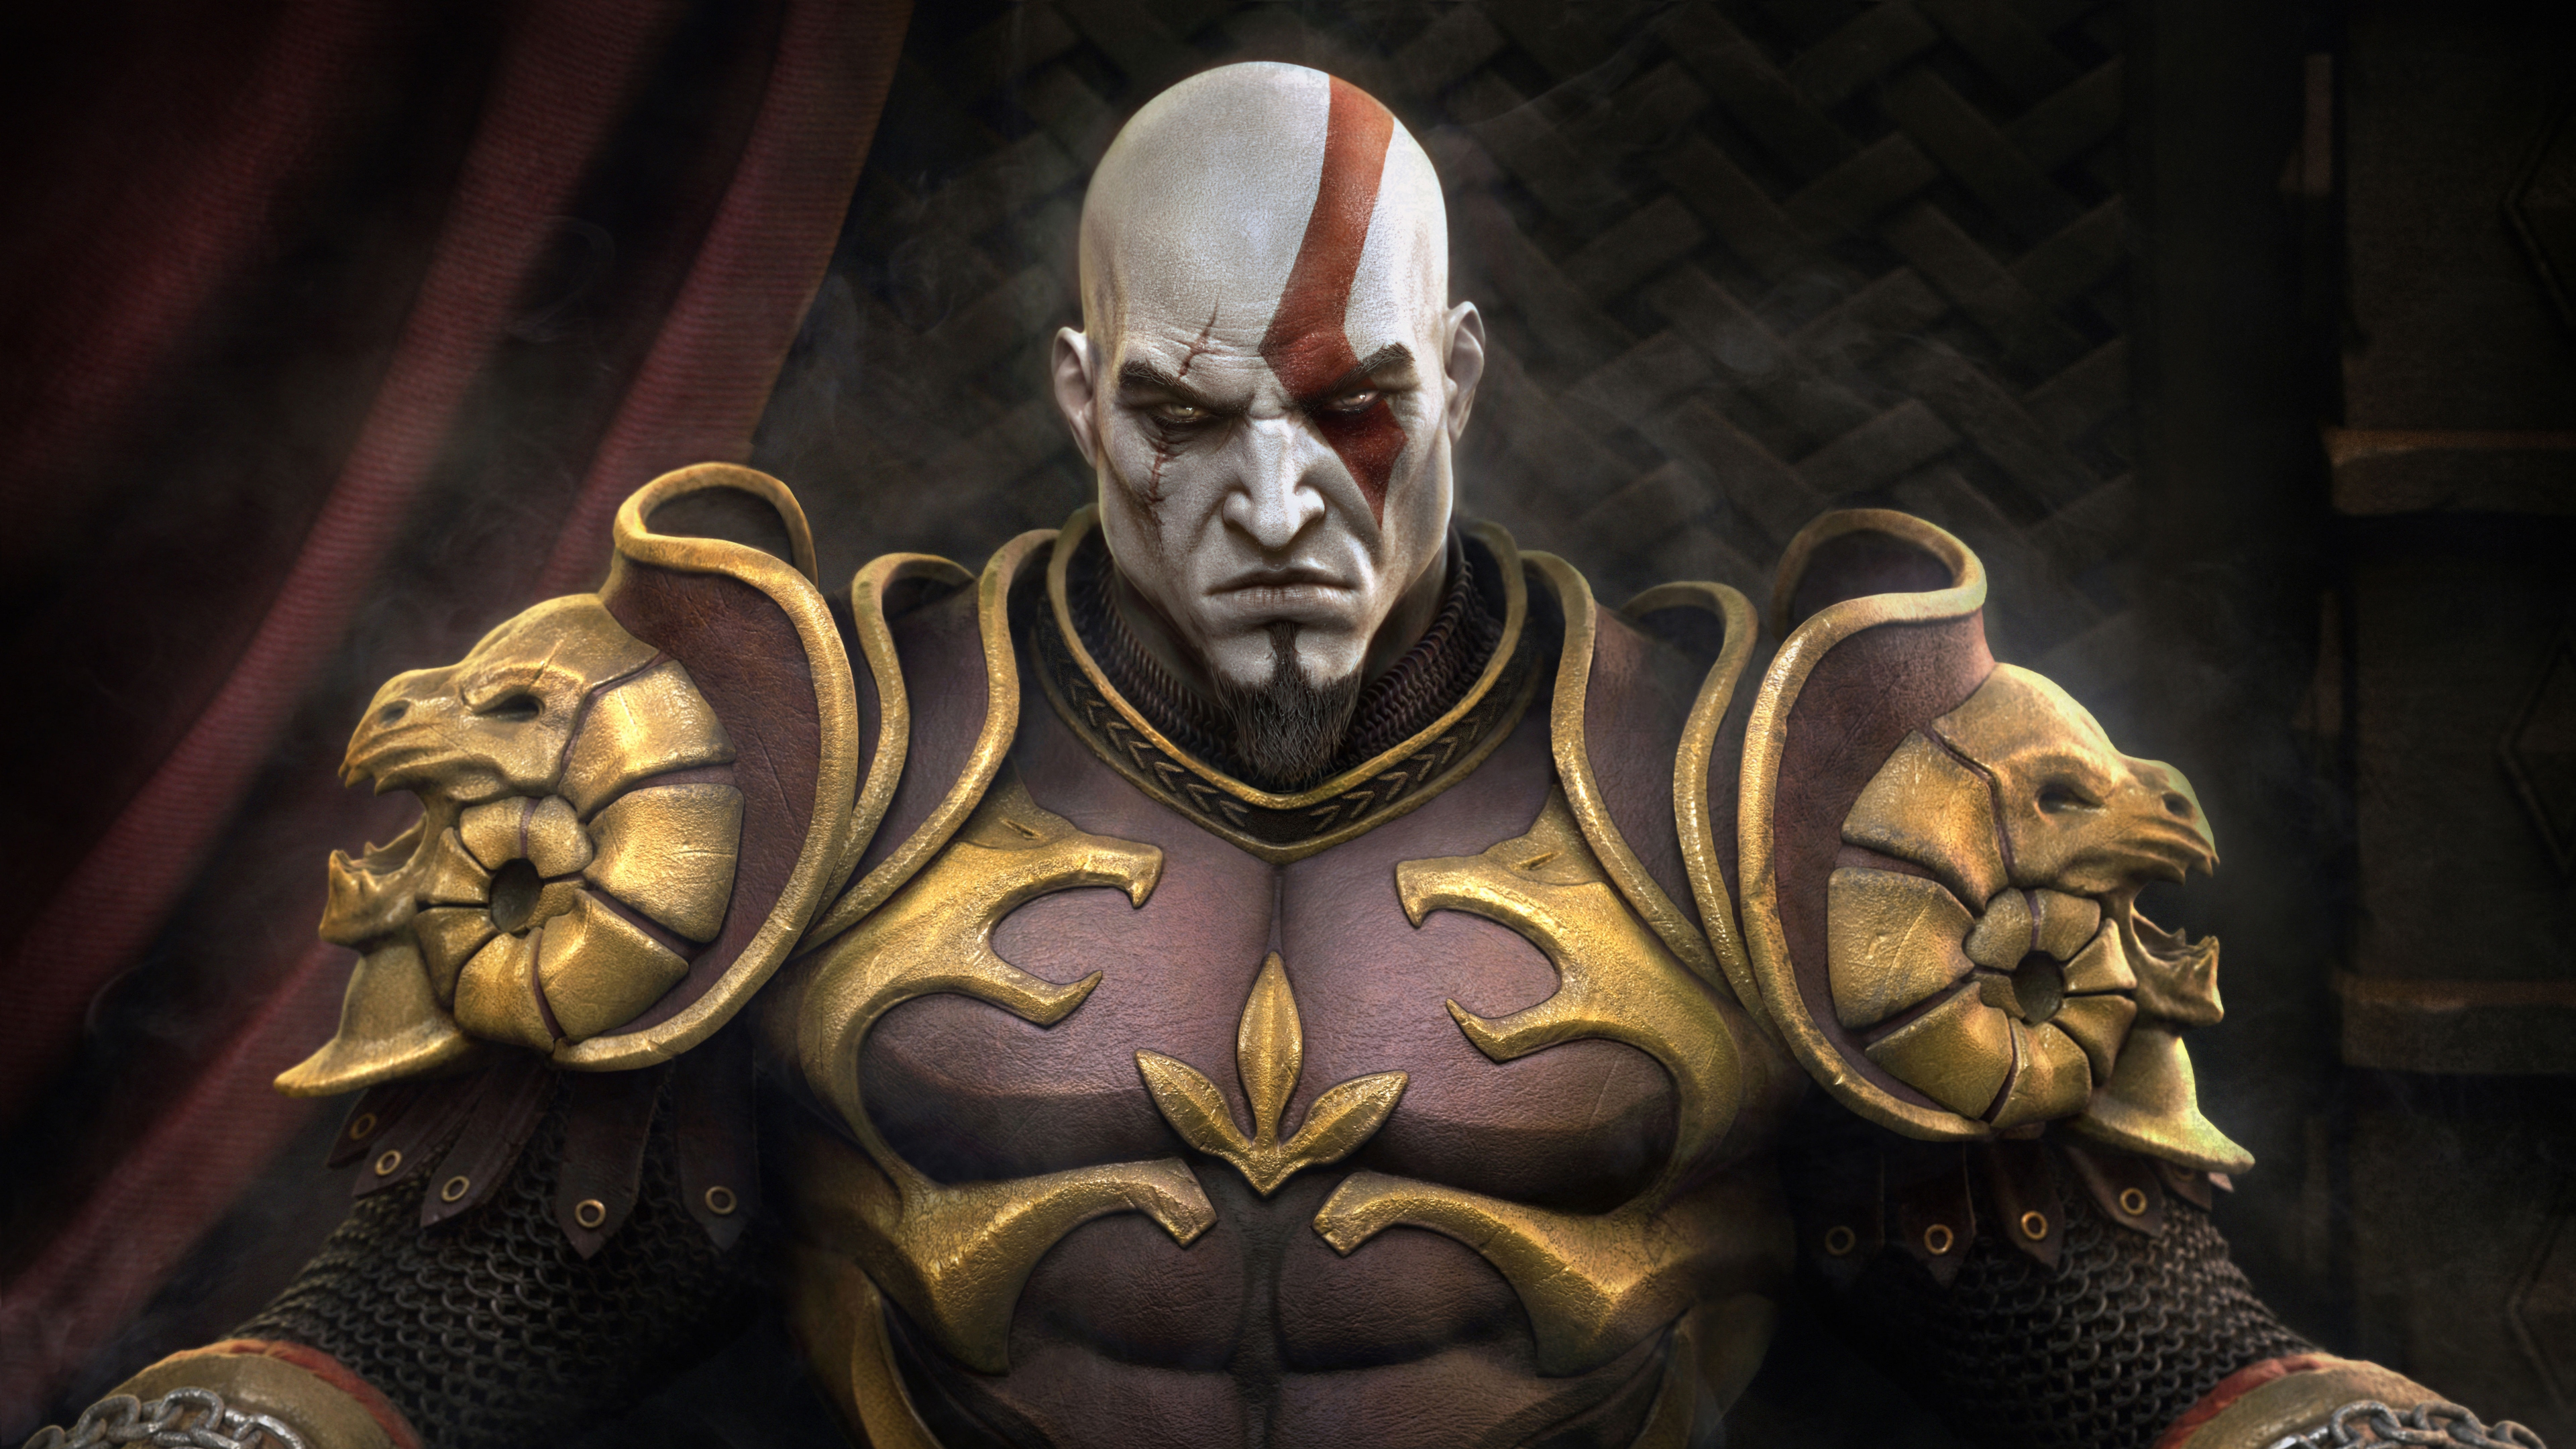 Wallpaper ID 77196  kratos god of war 4 god of war games ps games  hd 4k free download